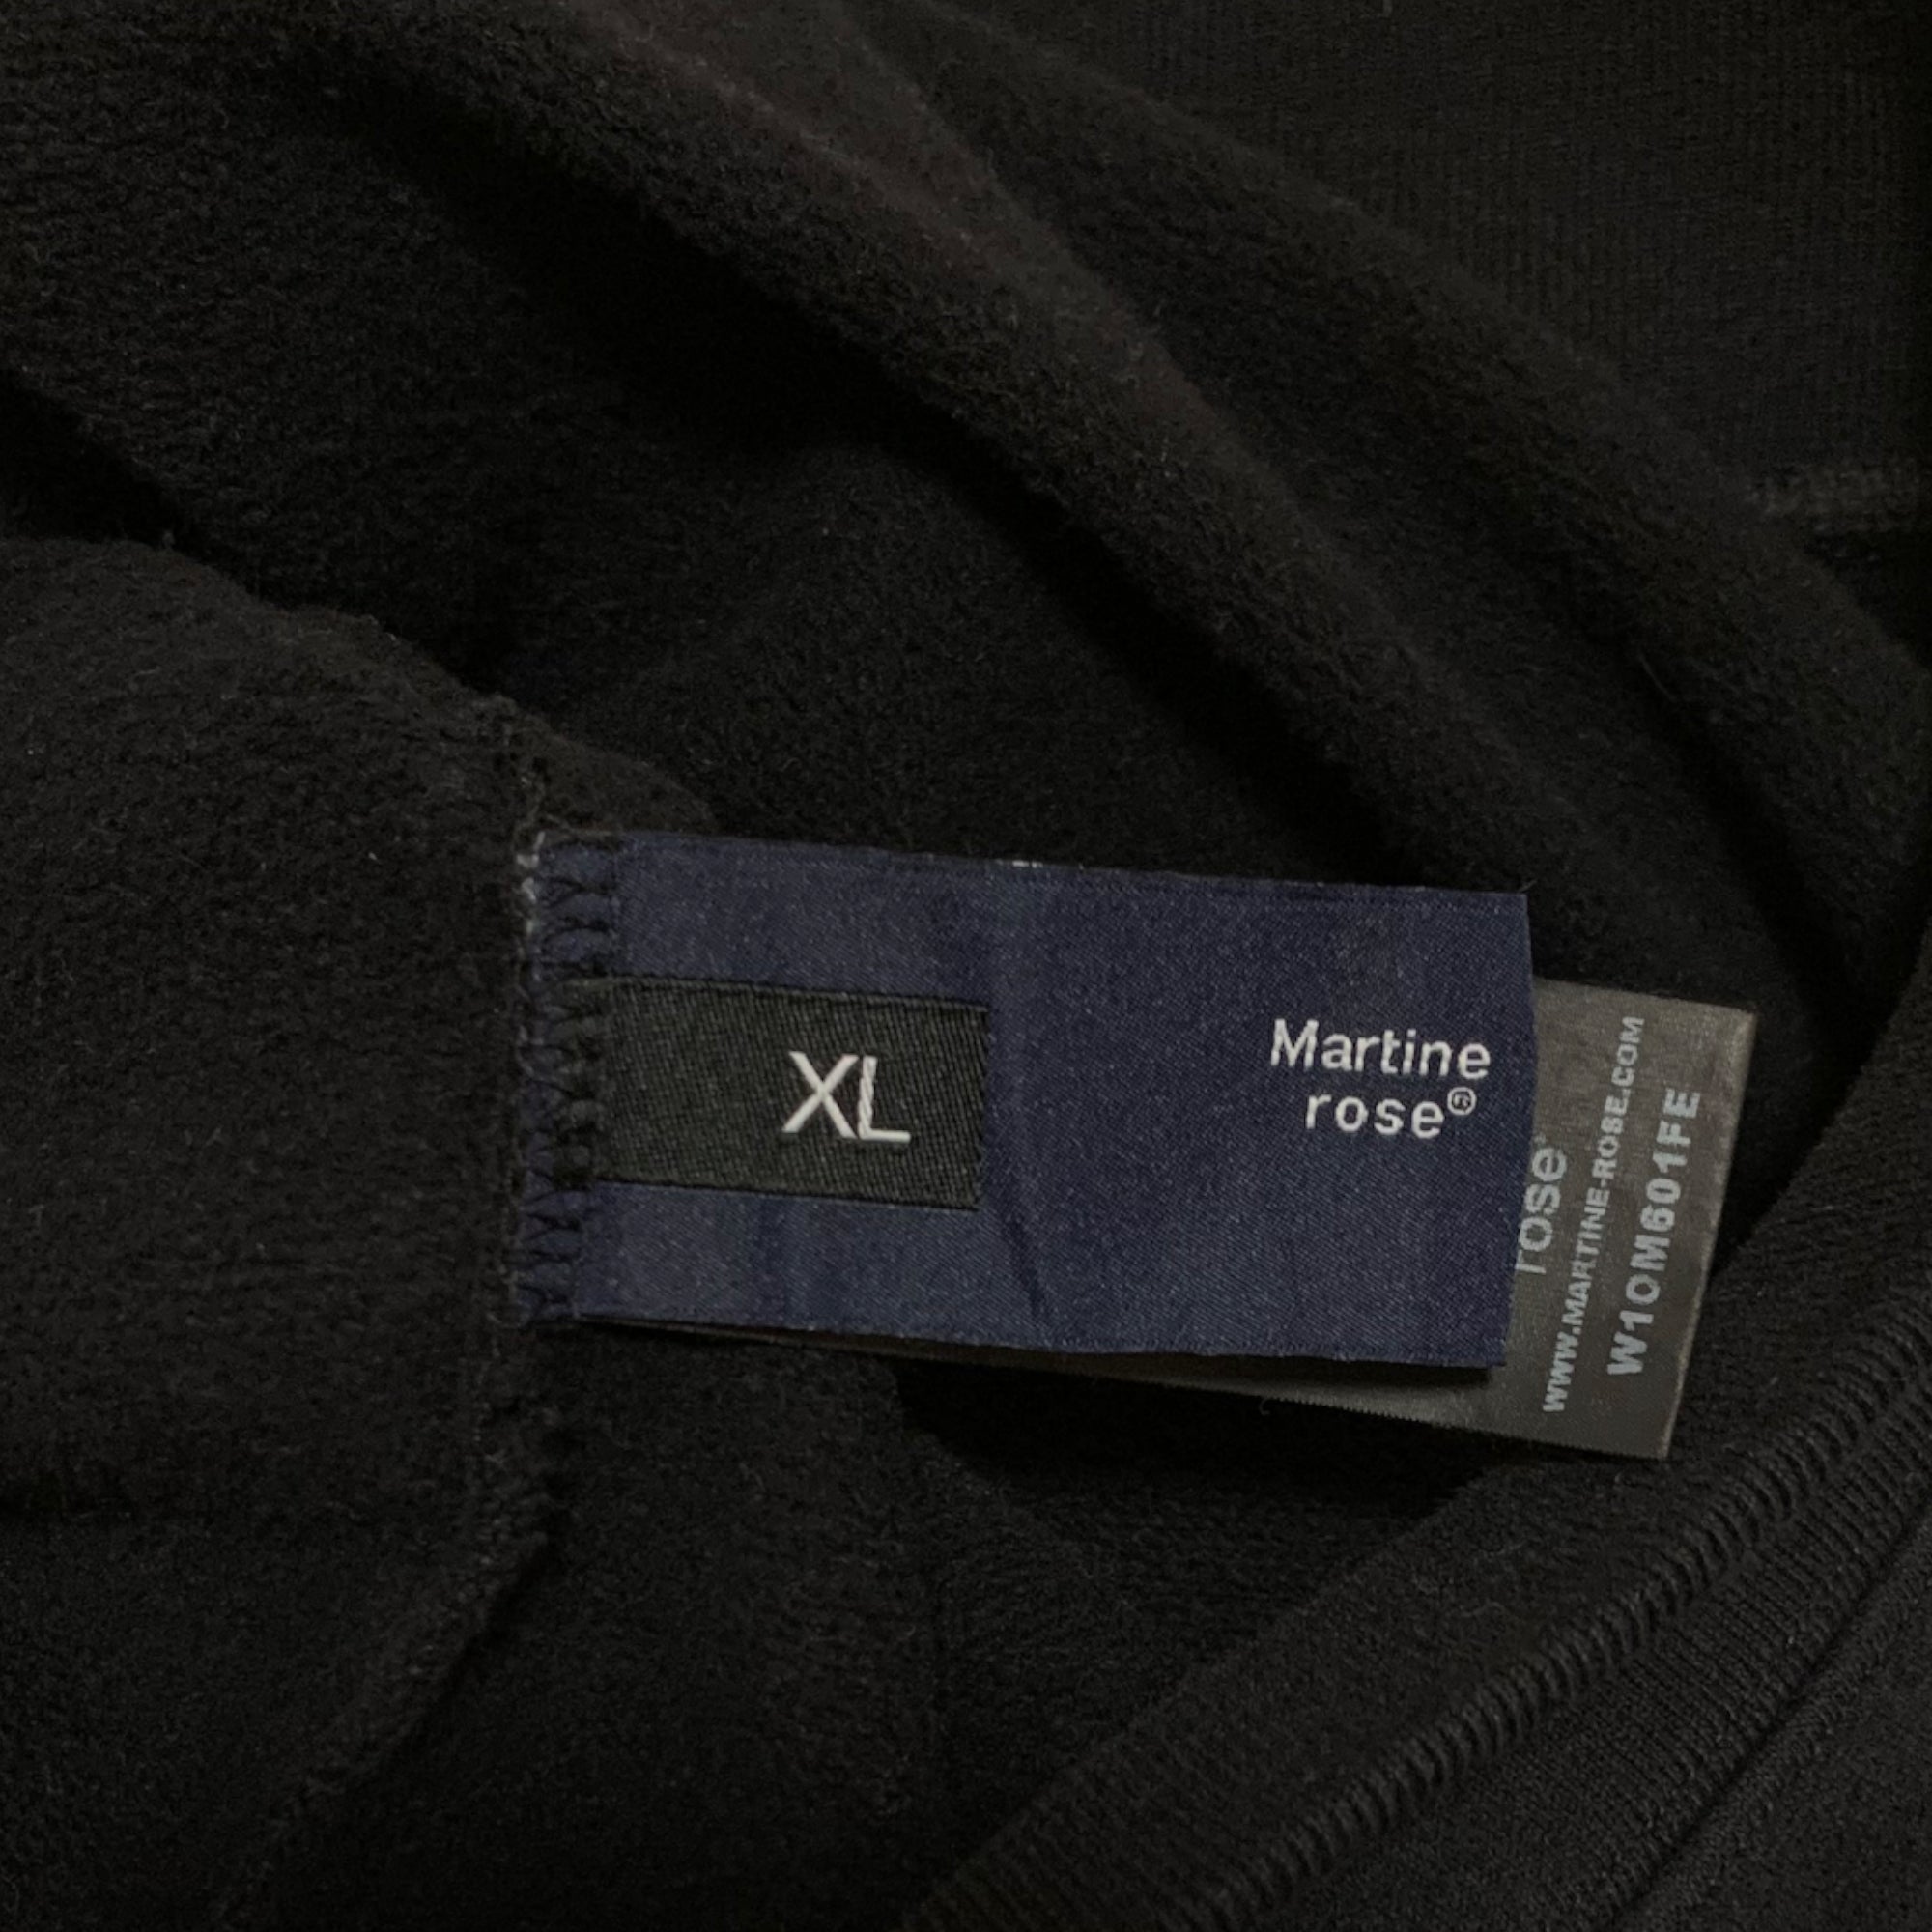 Martine Rose logo print crew neck sweatshirt |Size:XL|